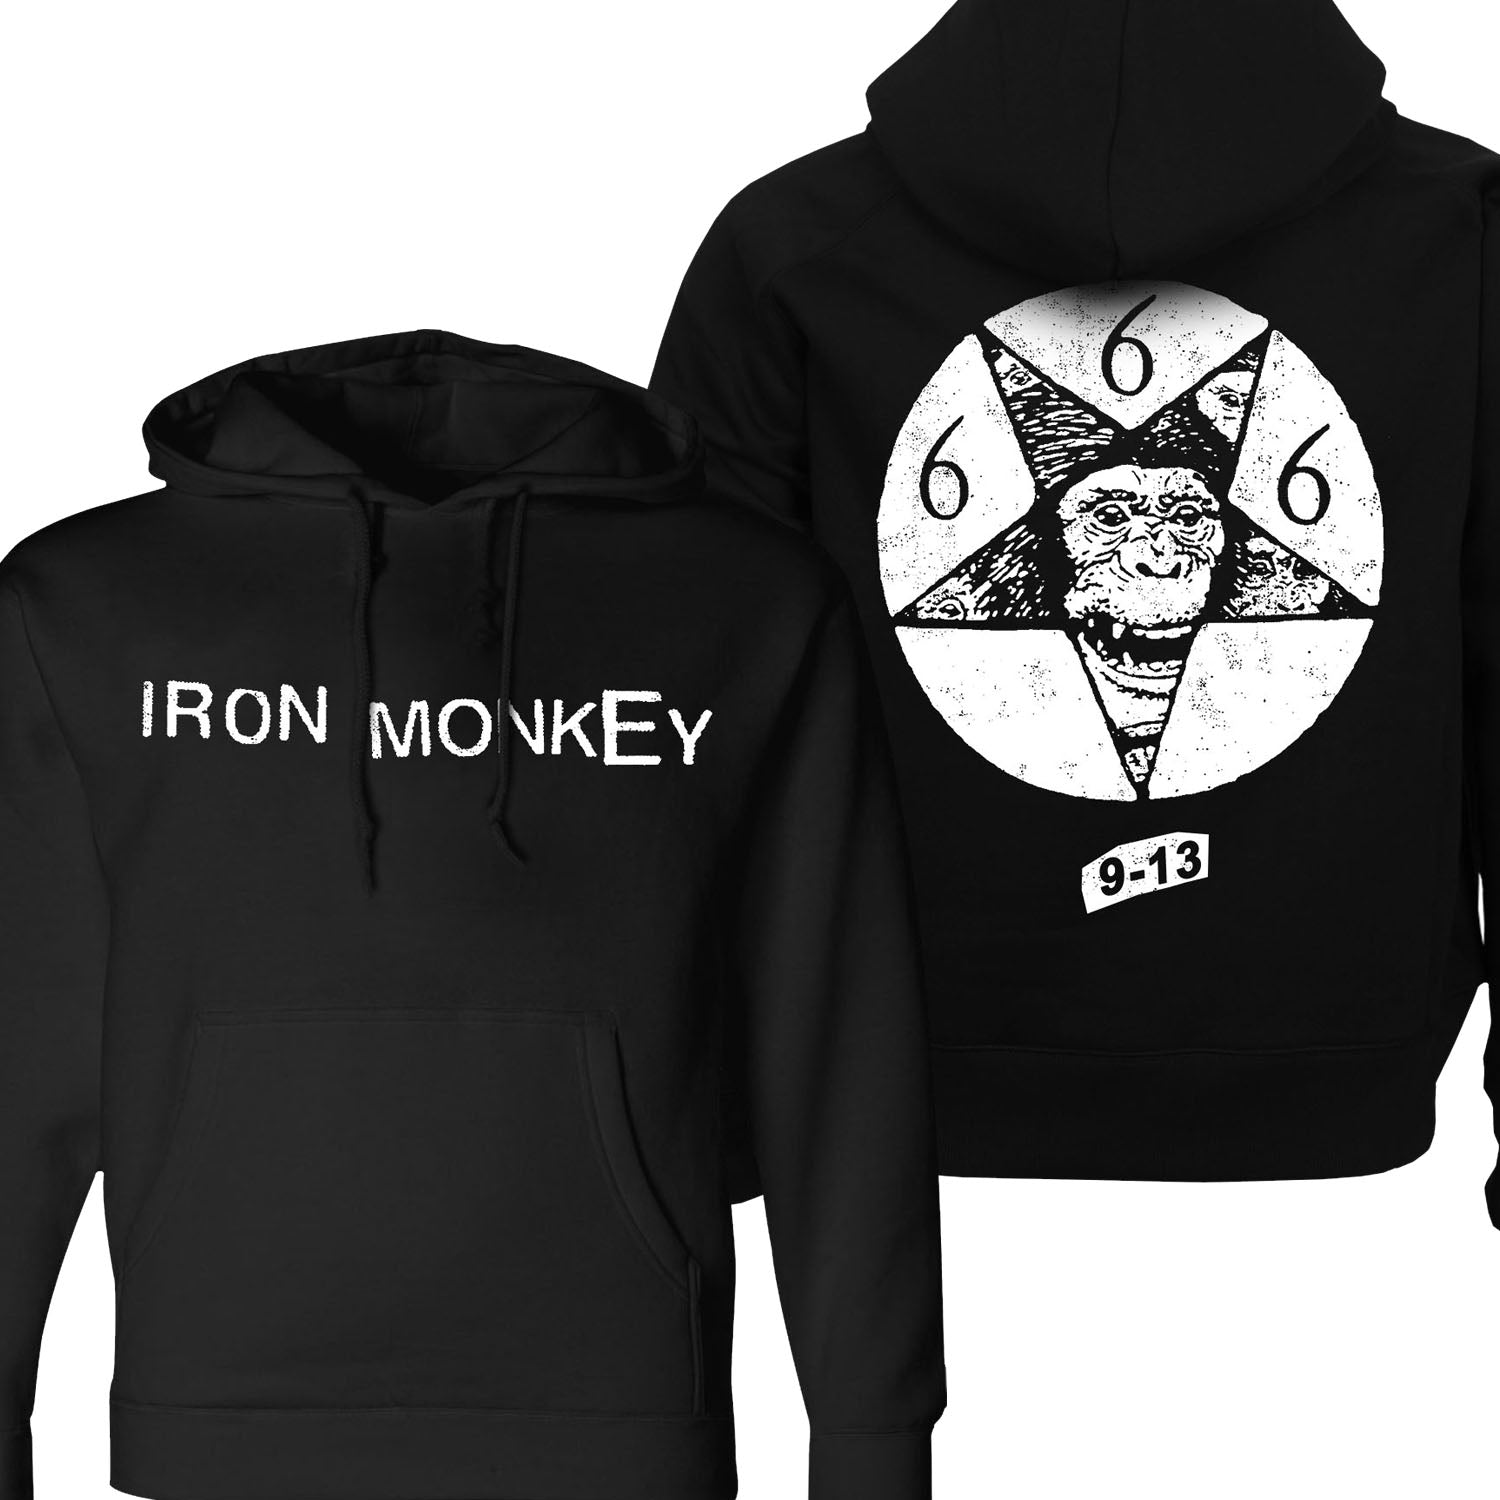 Iron Monkey "9-13" Pullover Hoodie